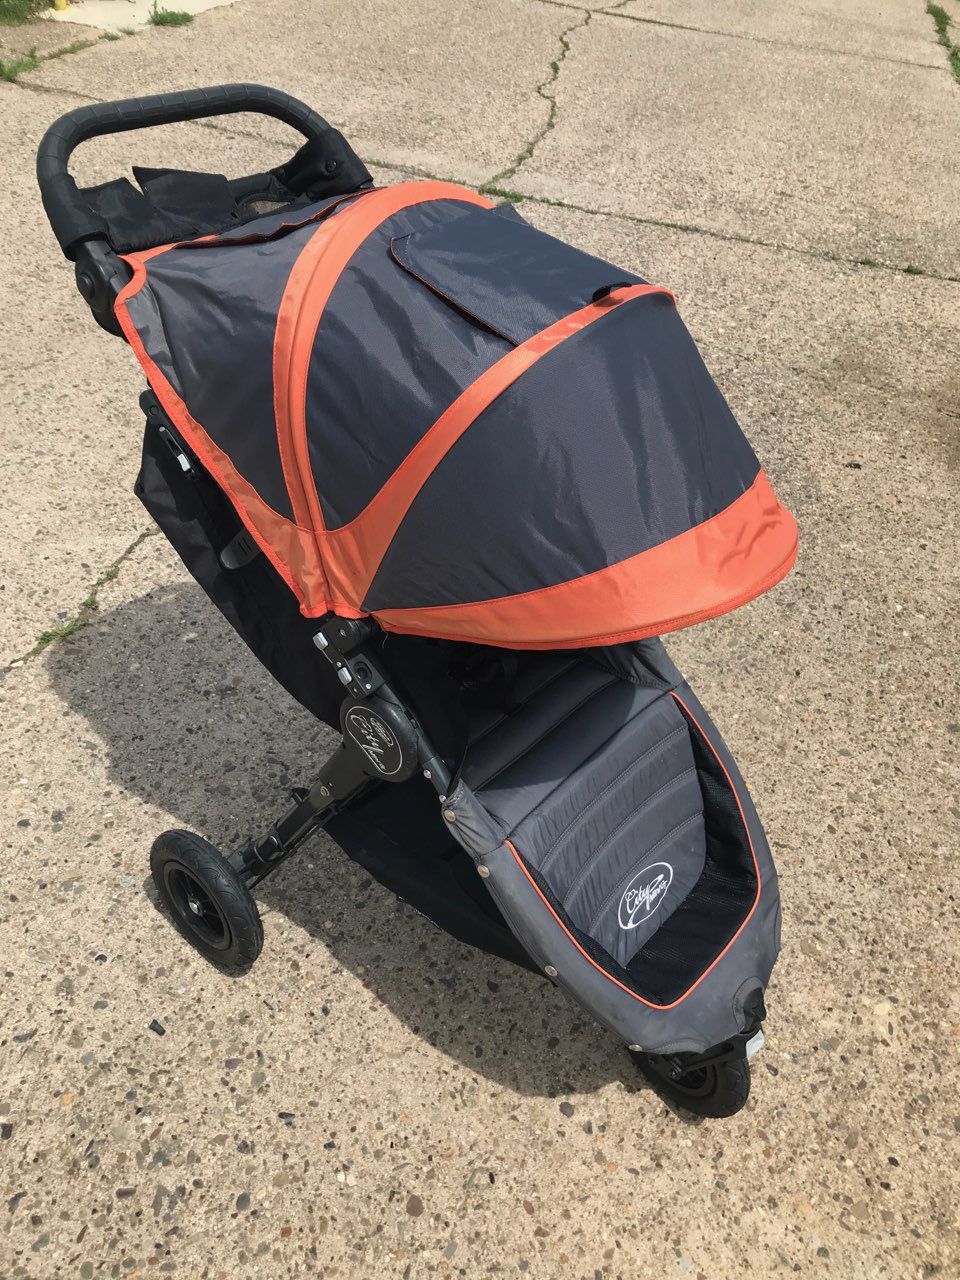 Baby Jogger City Mini gt stroller